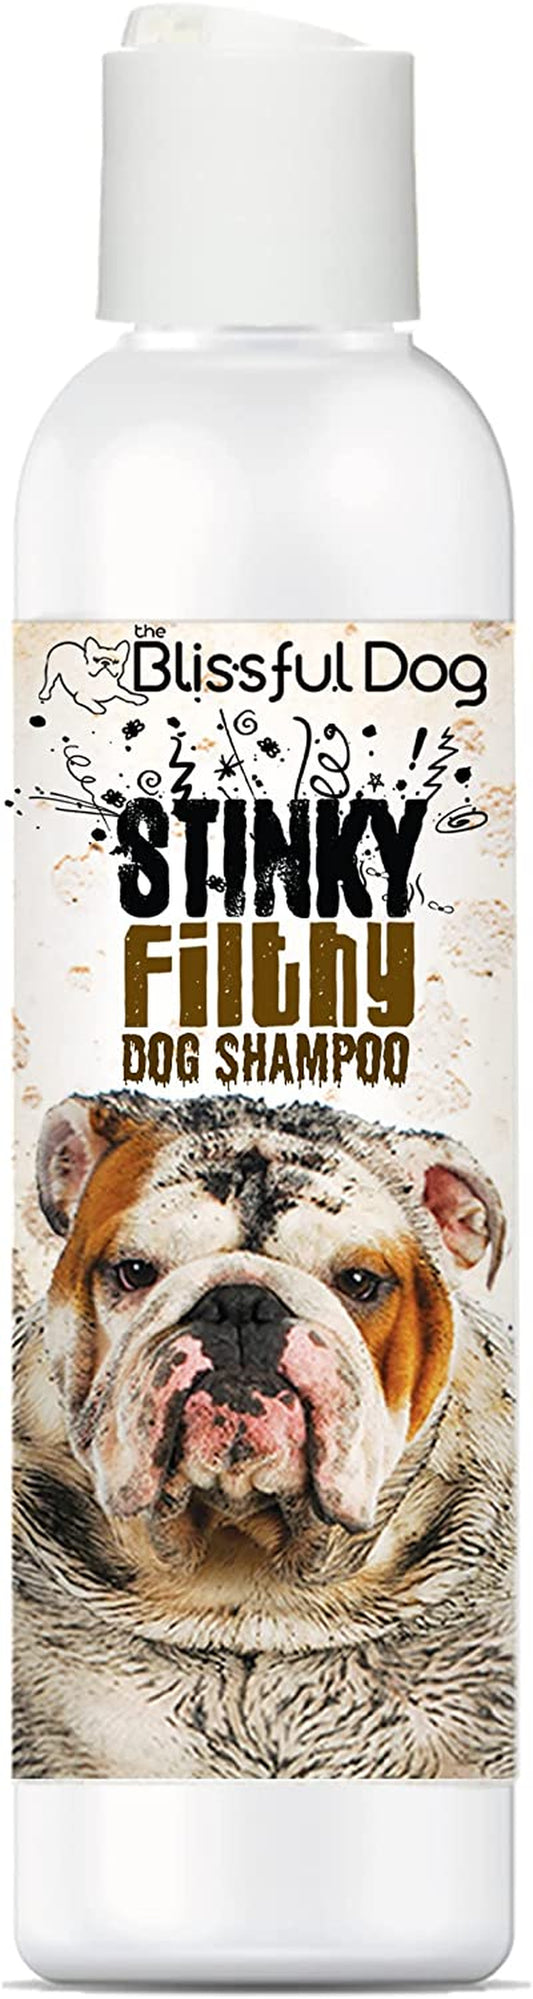 Stinky Filthy Dog Shampoo, 16 Oz